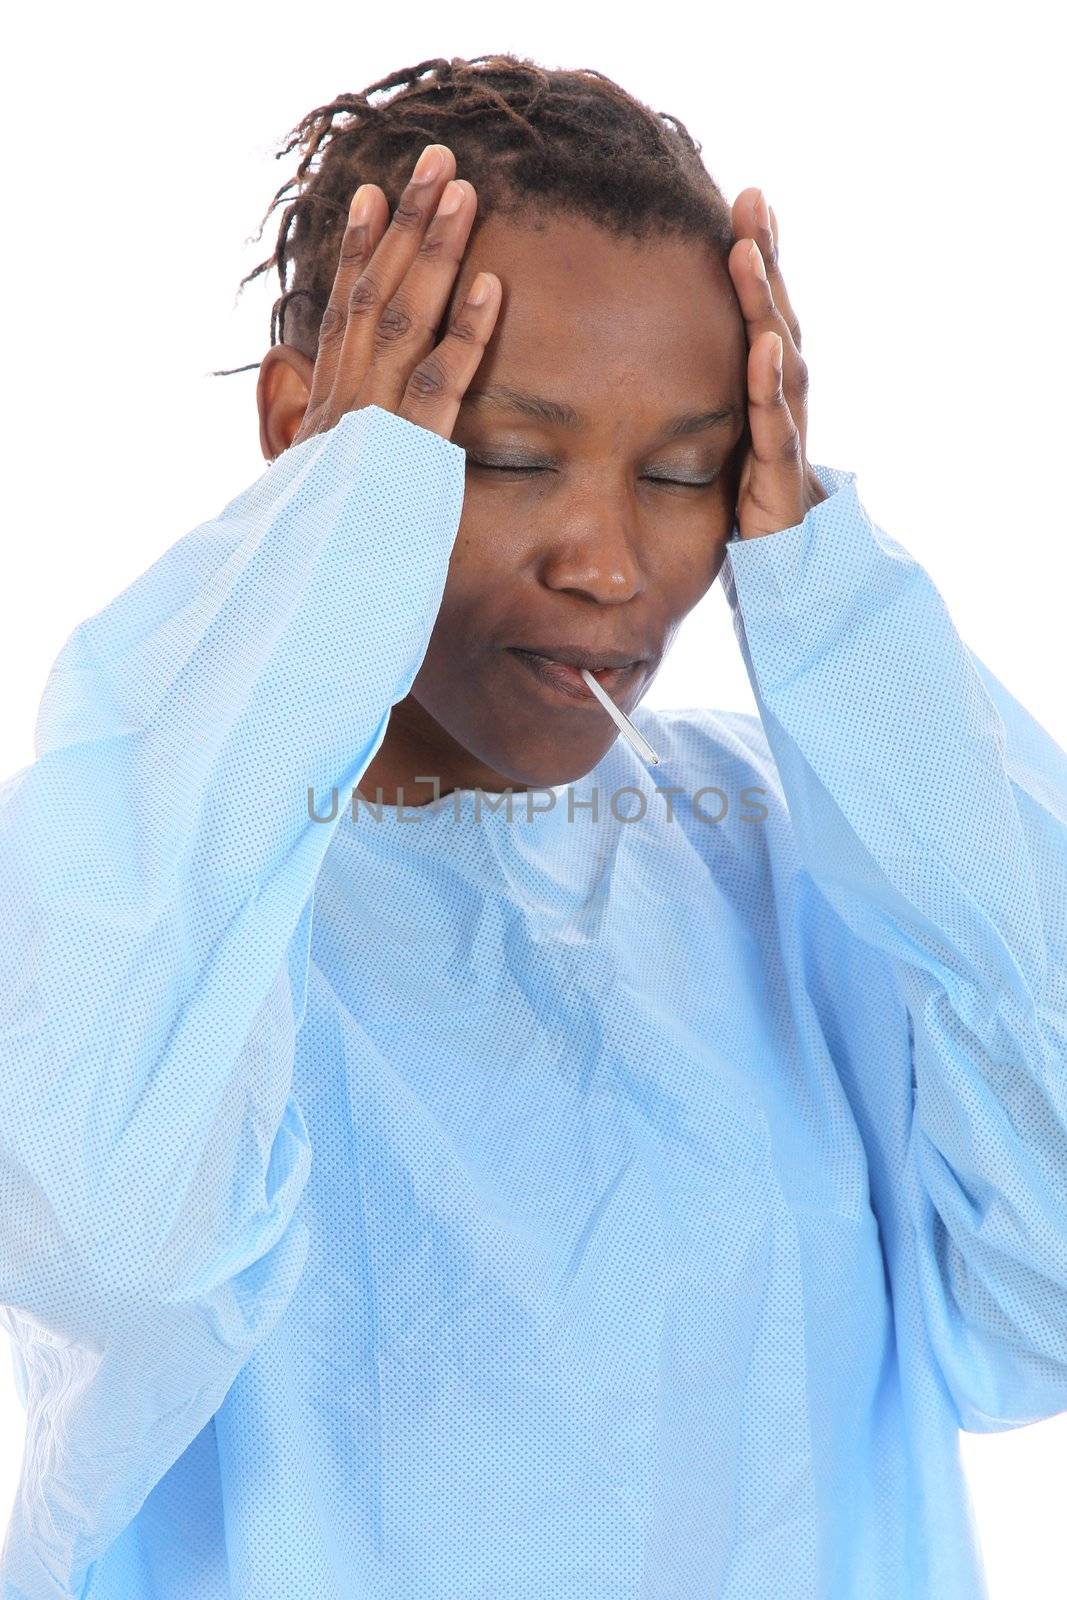 Sick African Woman by fouroaks